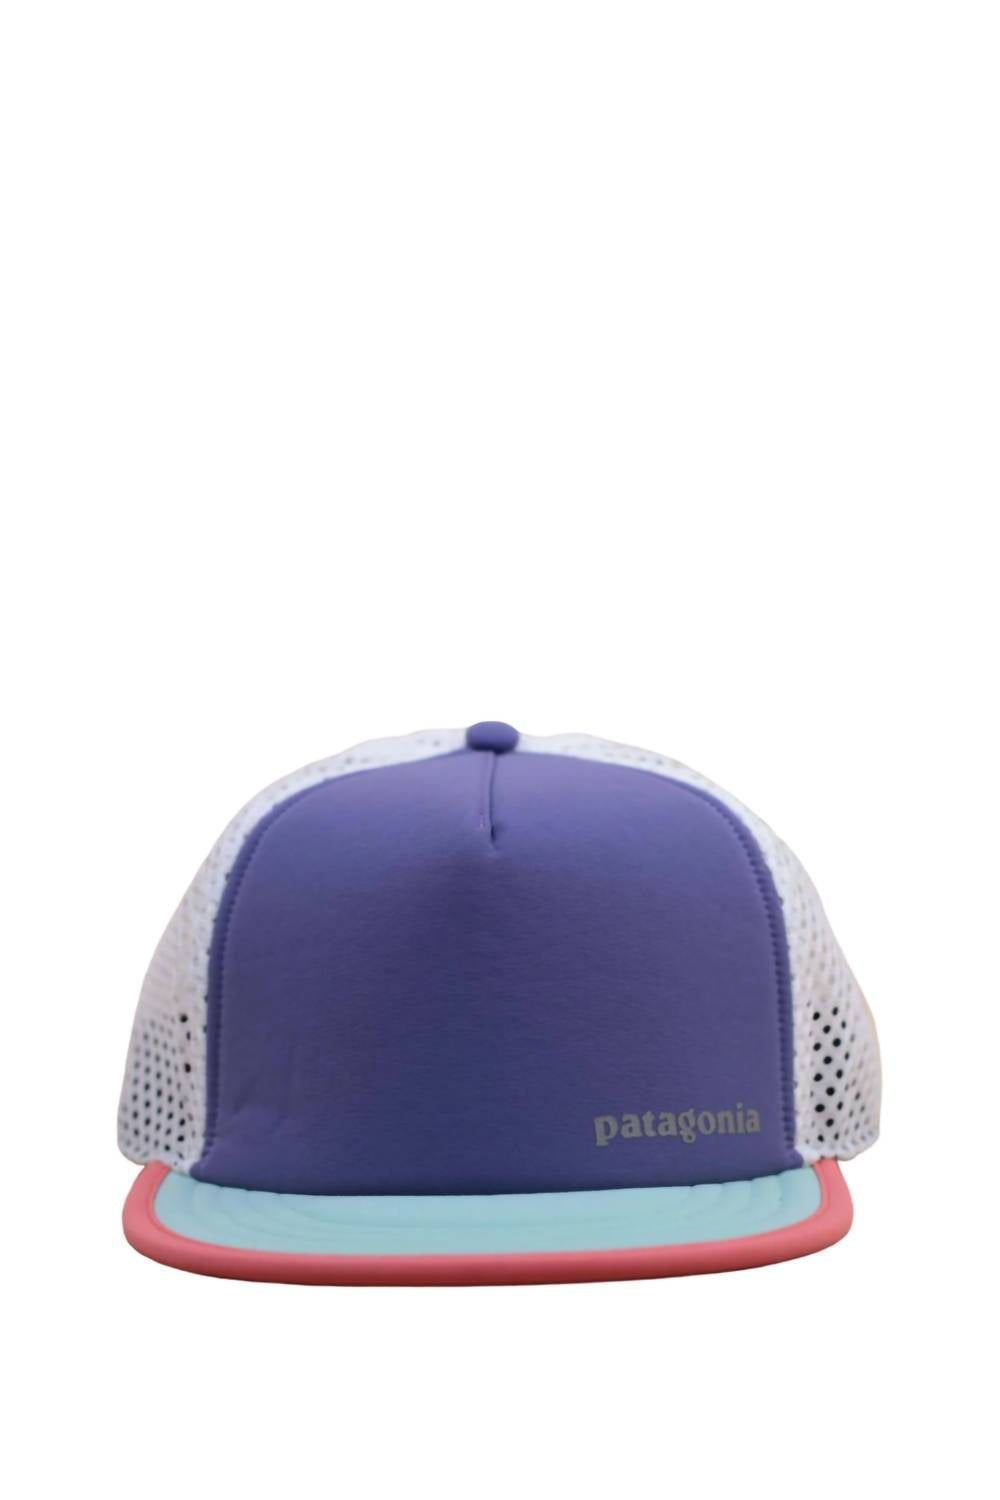 Patagonia Unisex Duckbill Shorty Trucker Hat In Perennial Purple In Multi